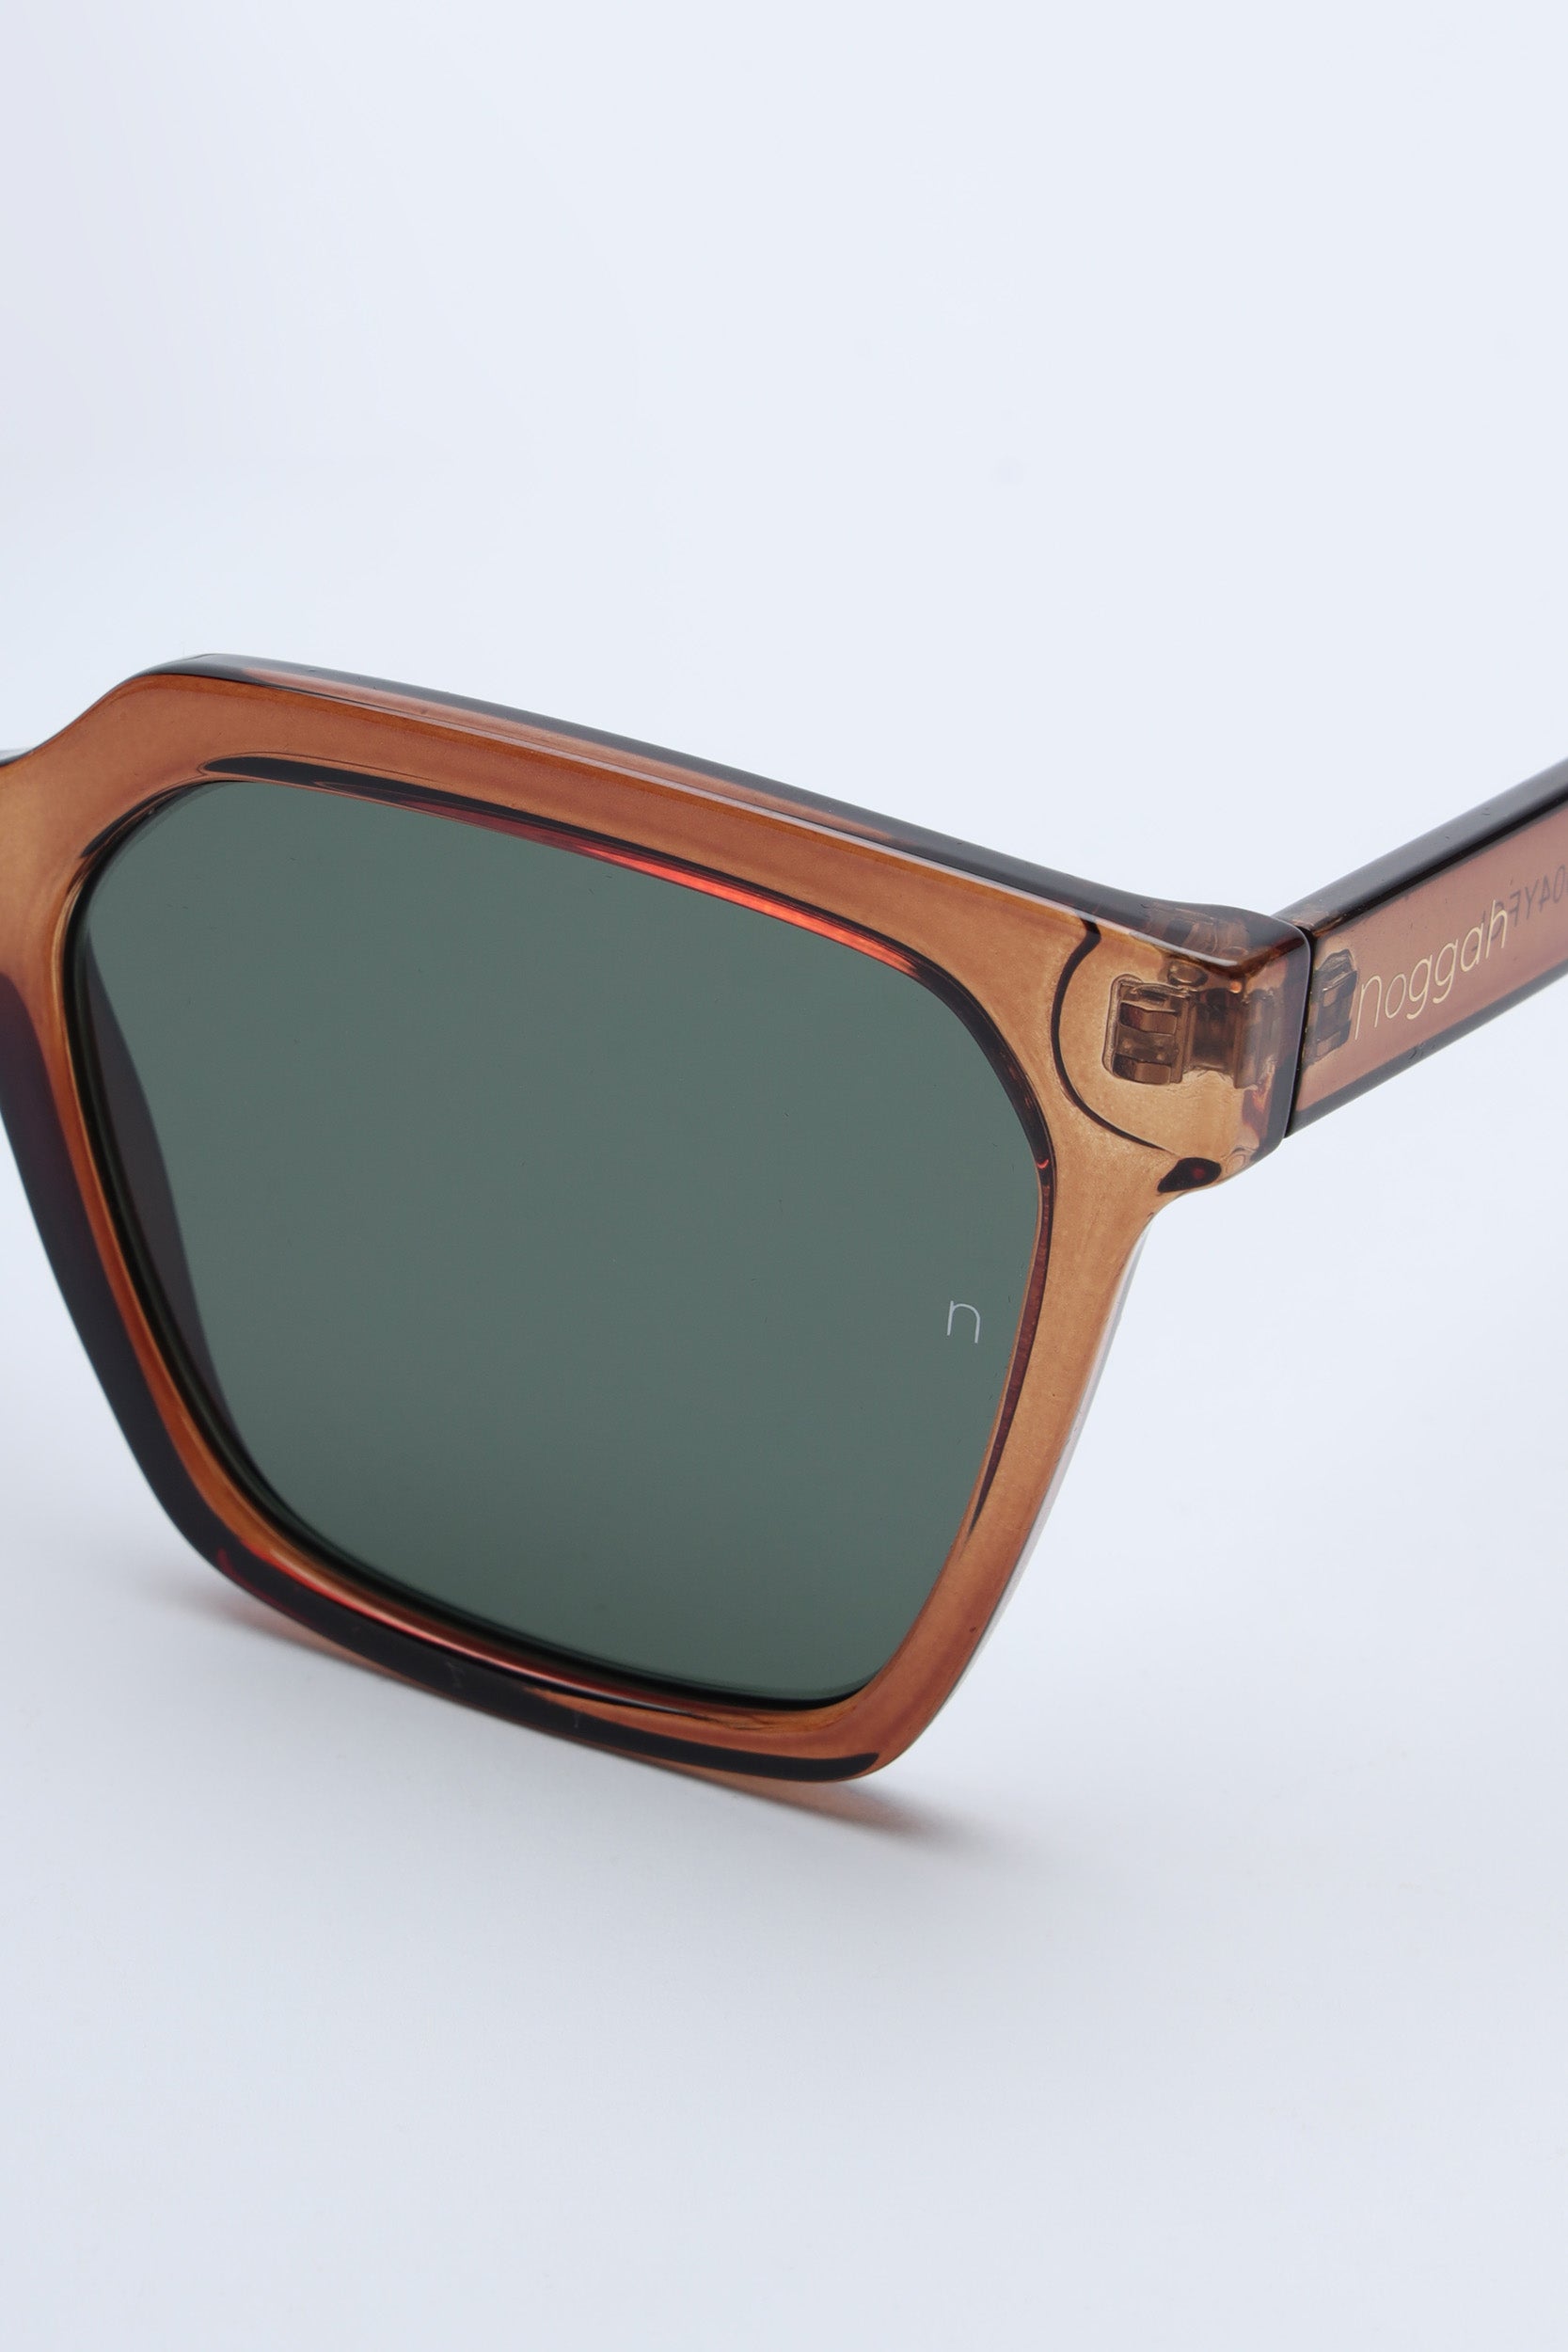 Oakley | Hydra Prizm Sapphire Sunglasses | Transartic Surf | SportsDirect .com